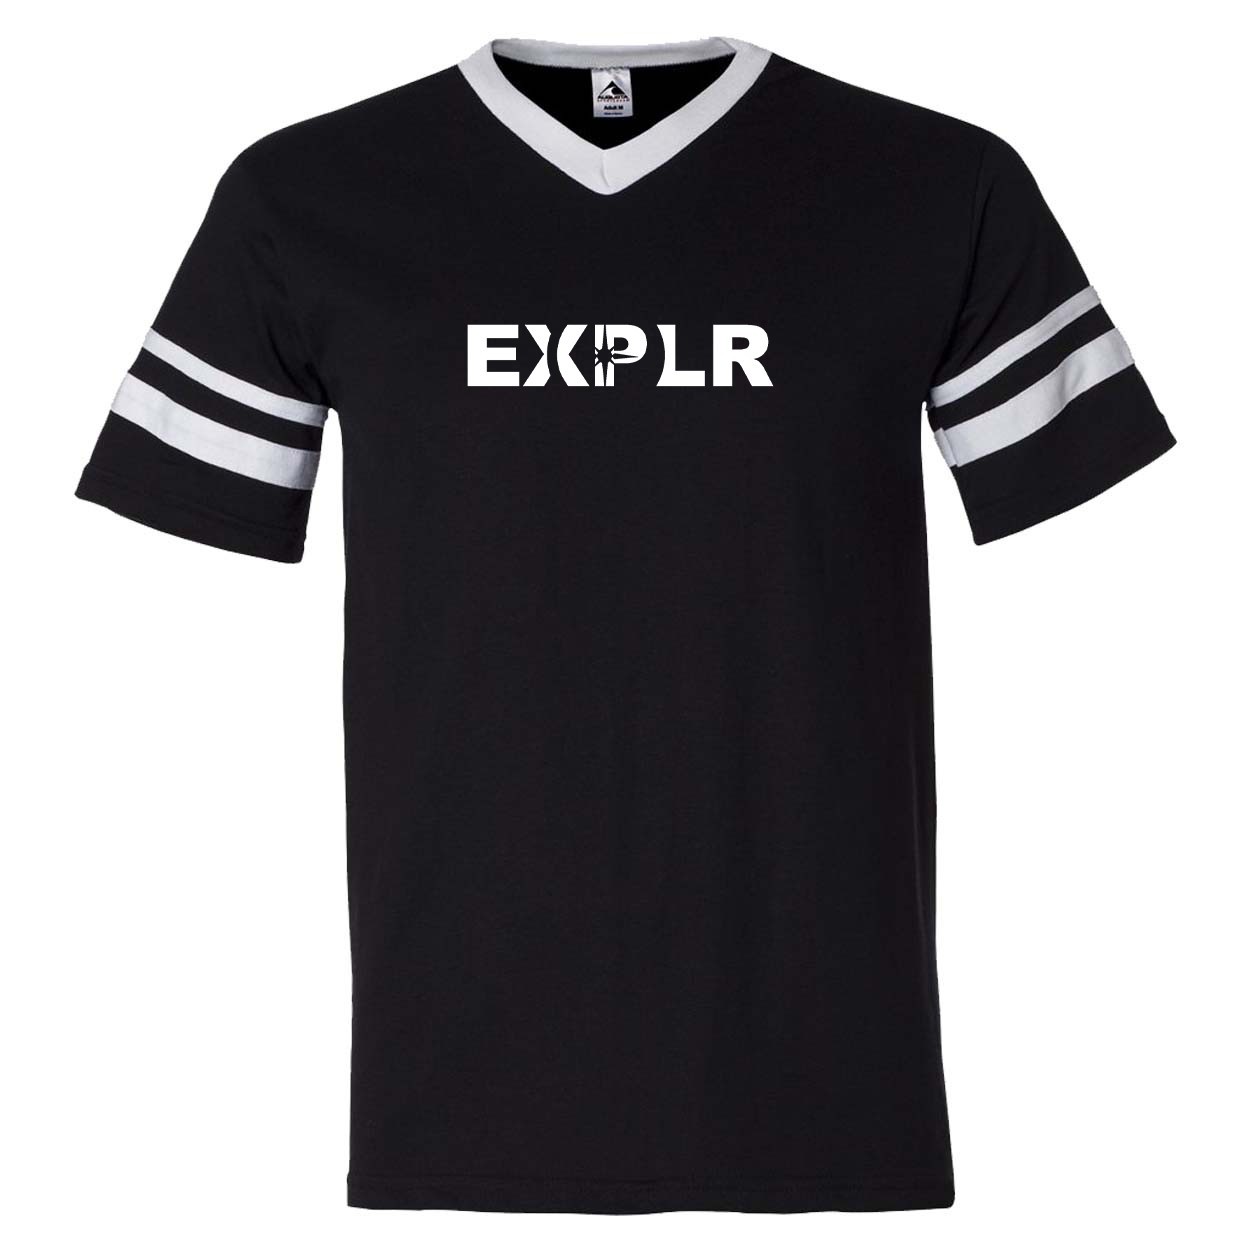 Explore Compass Logo Classic Premium Striped Jersey T-Shirt Black/White (White Logo)